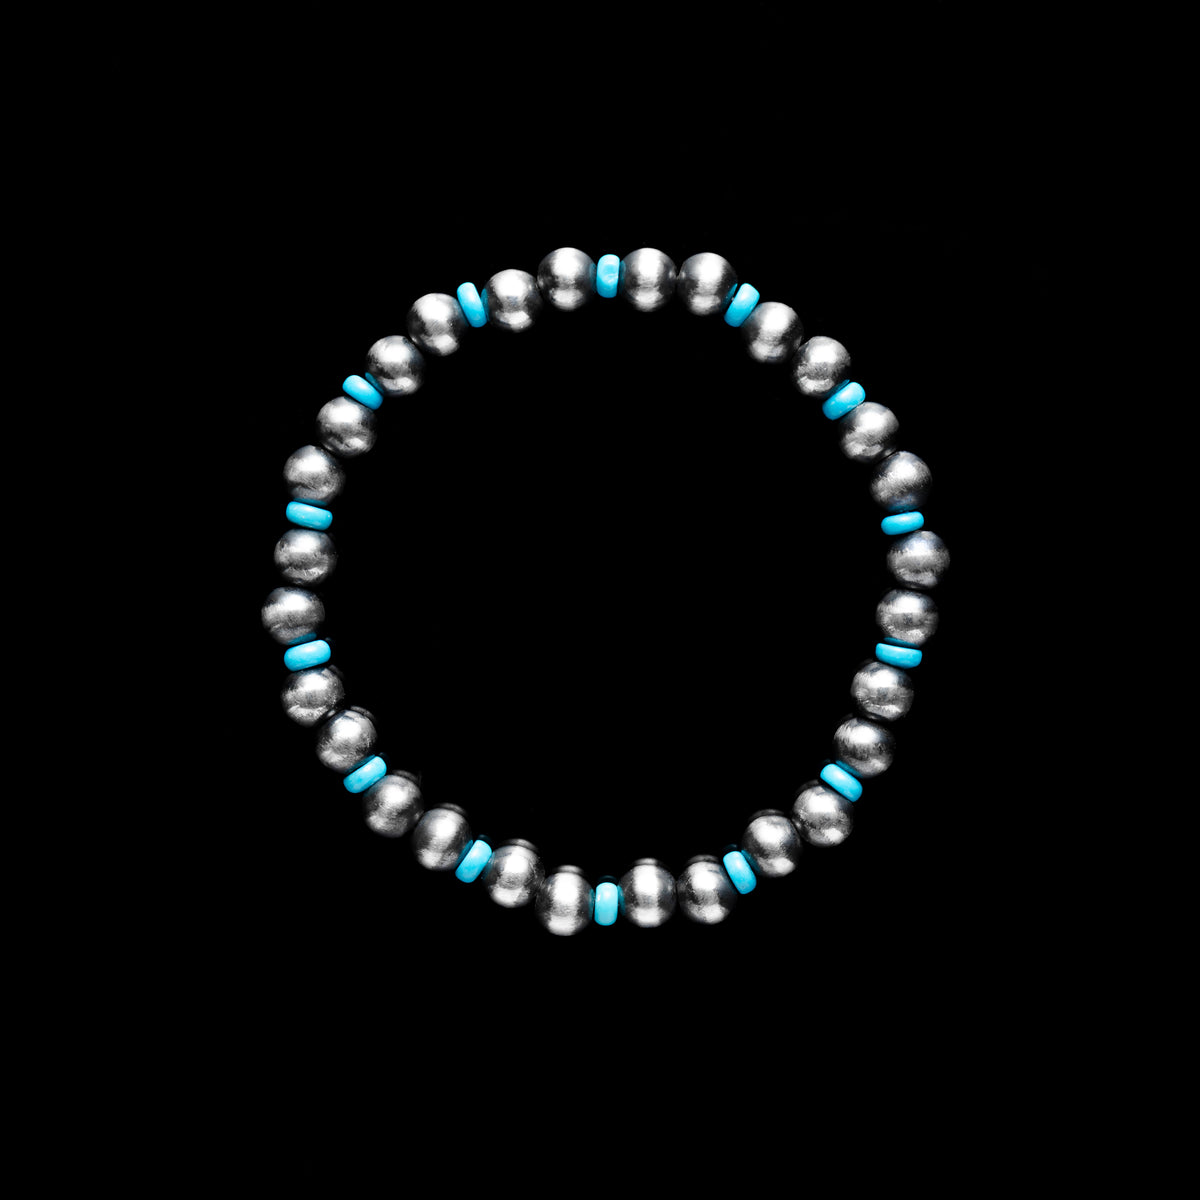 6mm Turquoise Santa Fe Pearl Stretch Bracelet